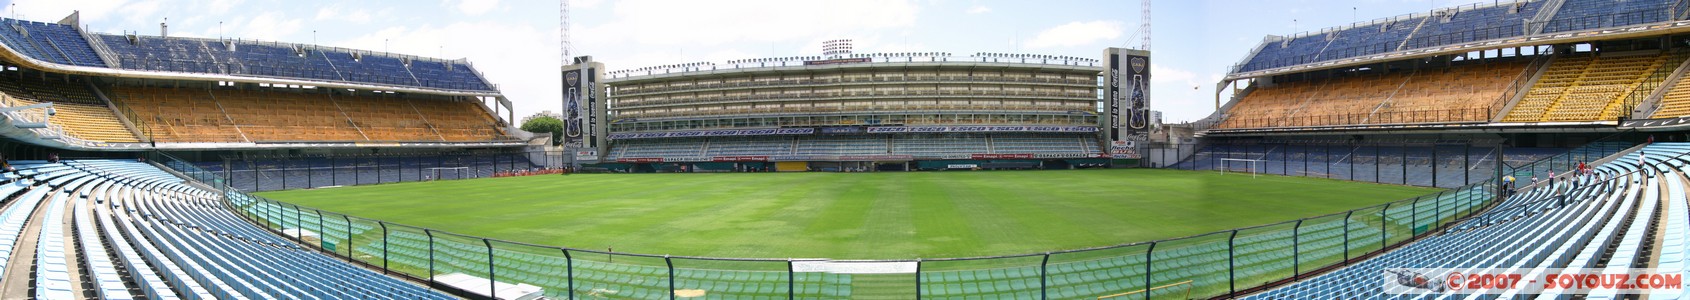 Buenos Aires - La Boca - Estadio de Boca Juniors - vue panoramique
